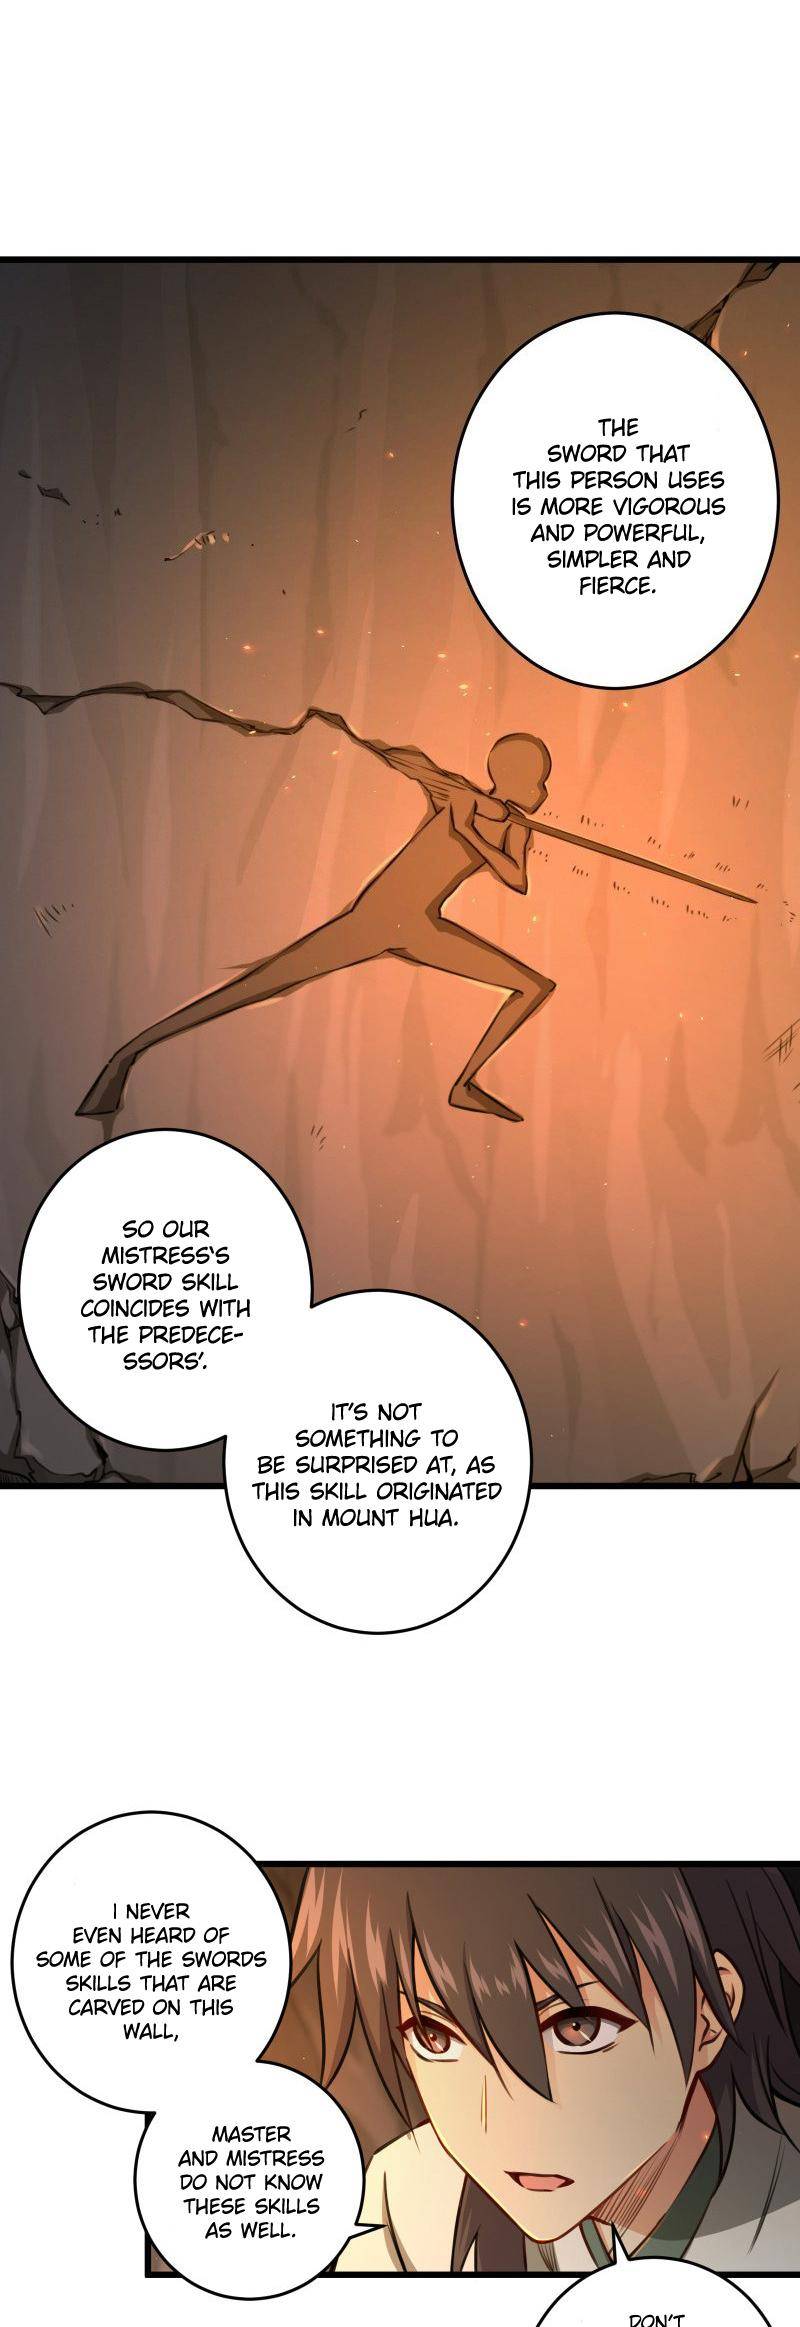 The Smiling, Proud Wanderer (Swordsman) - Page 2